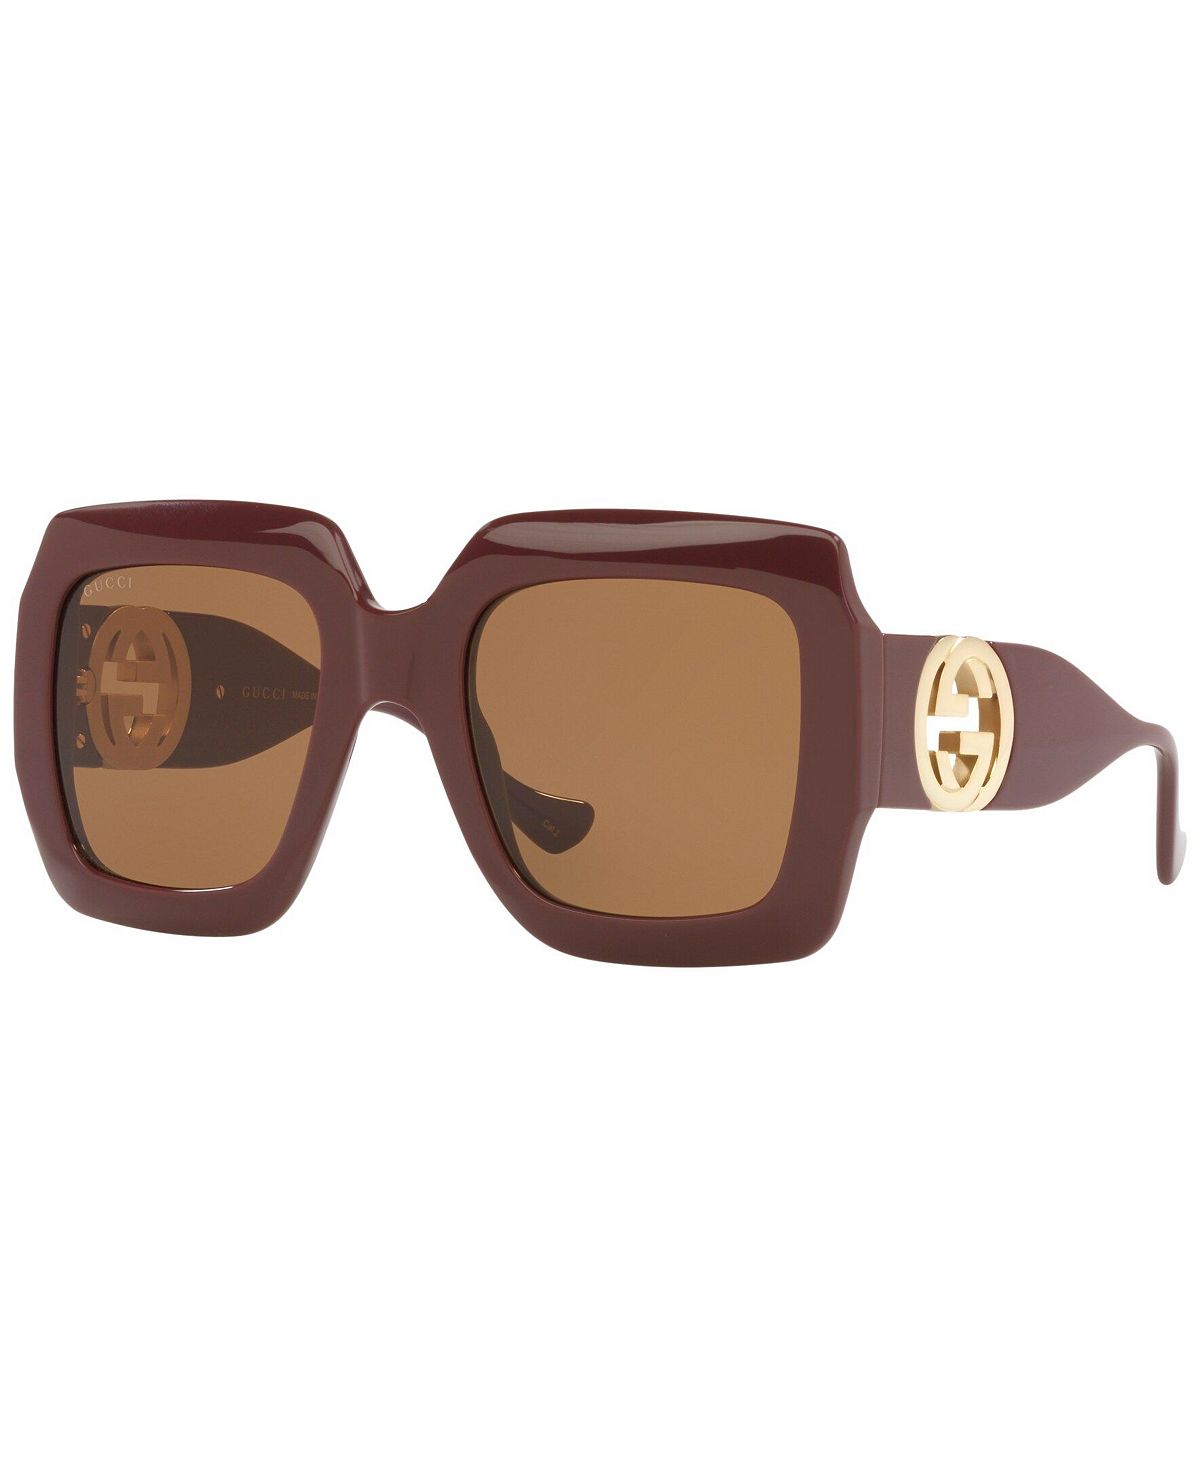 Женские солнцезащитные очки, GG1022S 54 Gucci цена и фото